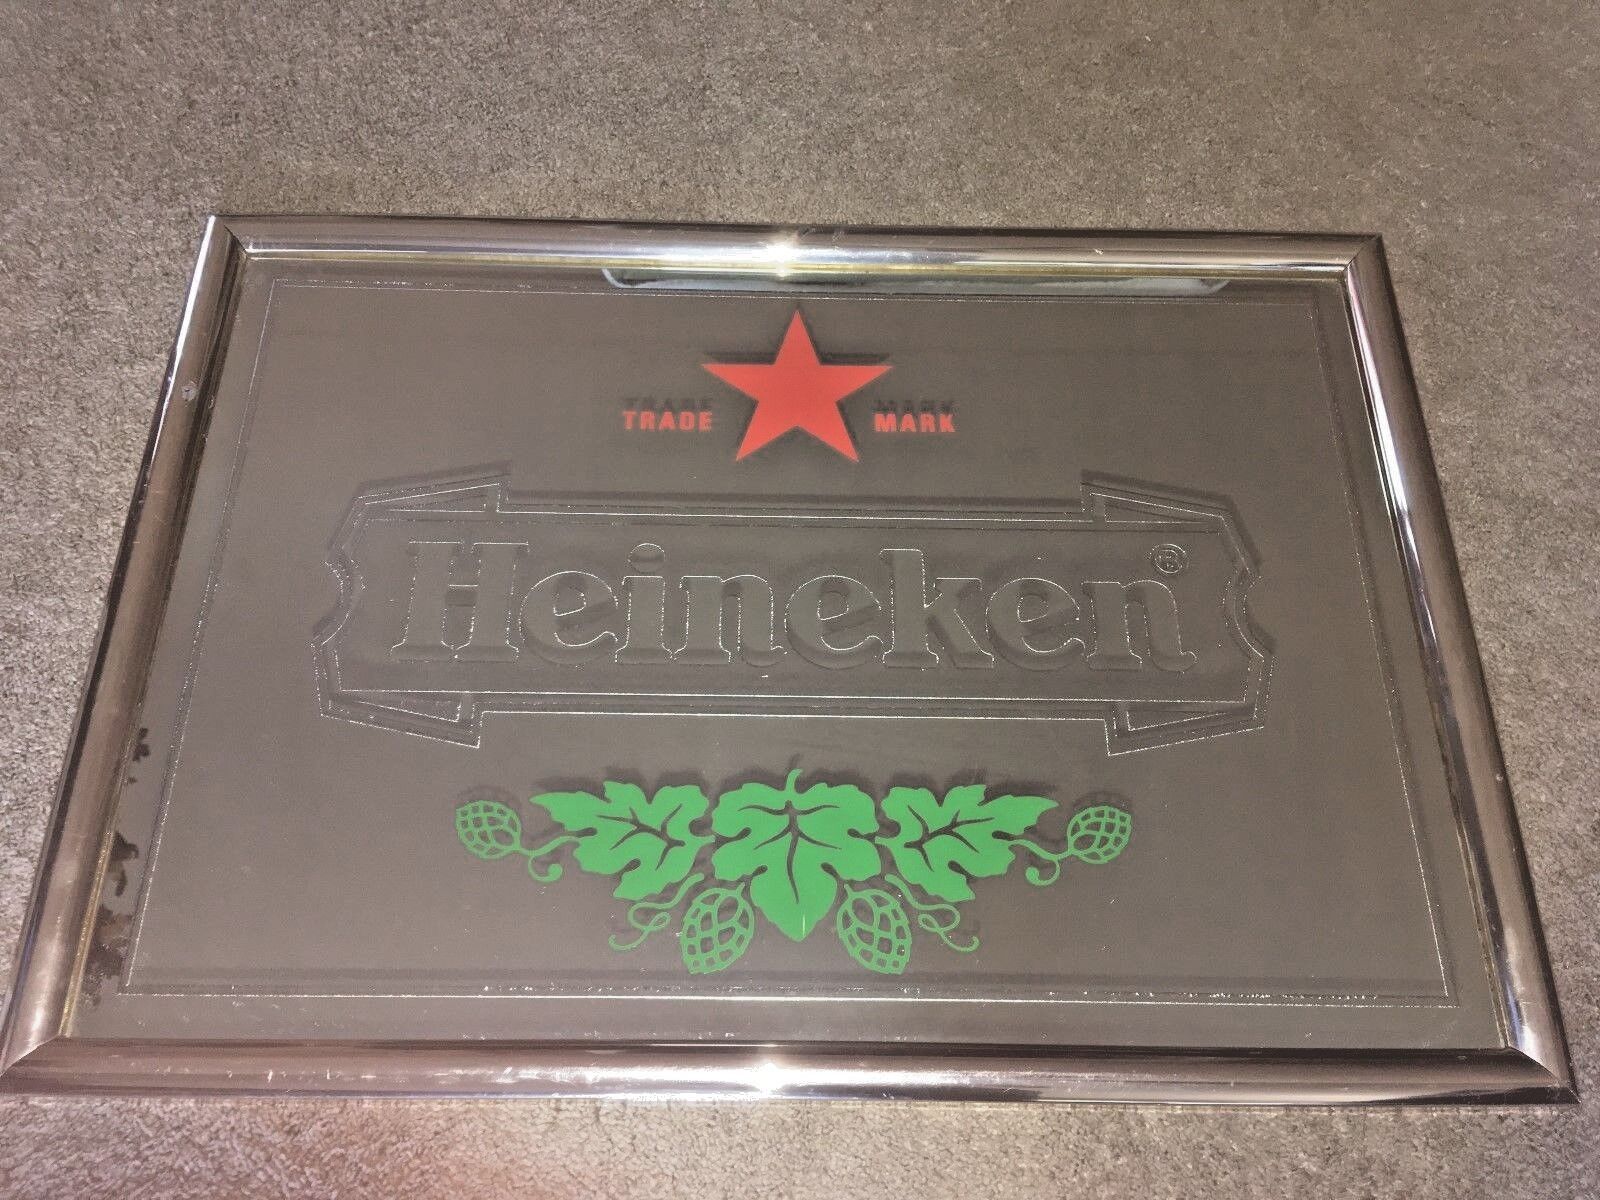 heineken framed beer mirror bar mirror green leaves trade*mark 27\'\' x 20\'\'